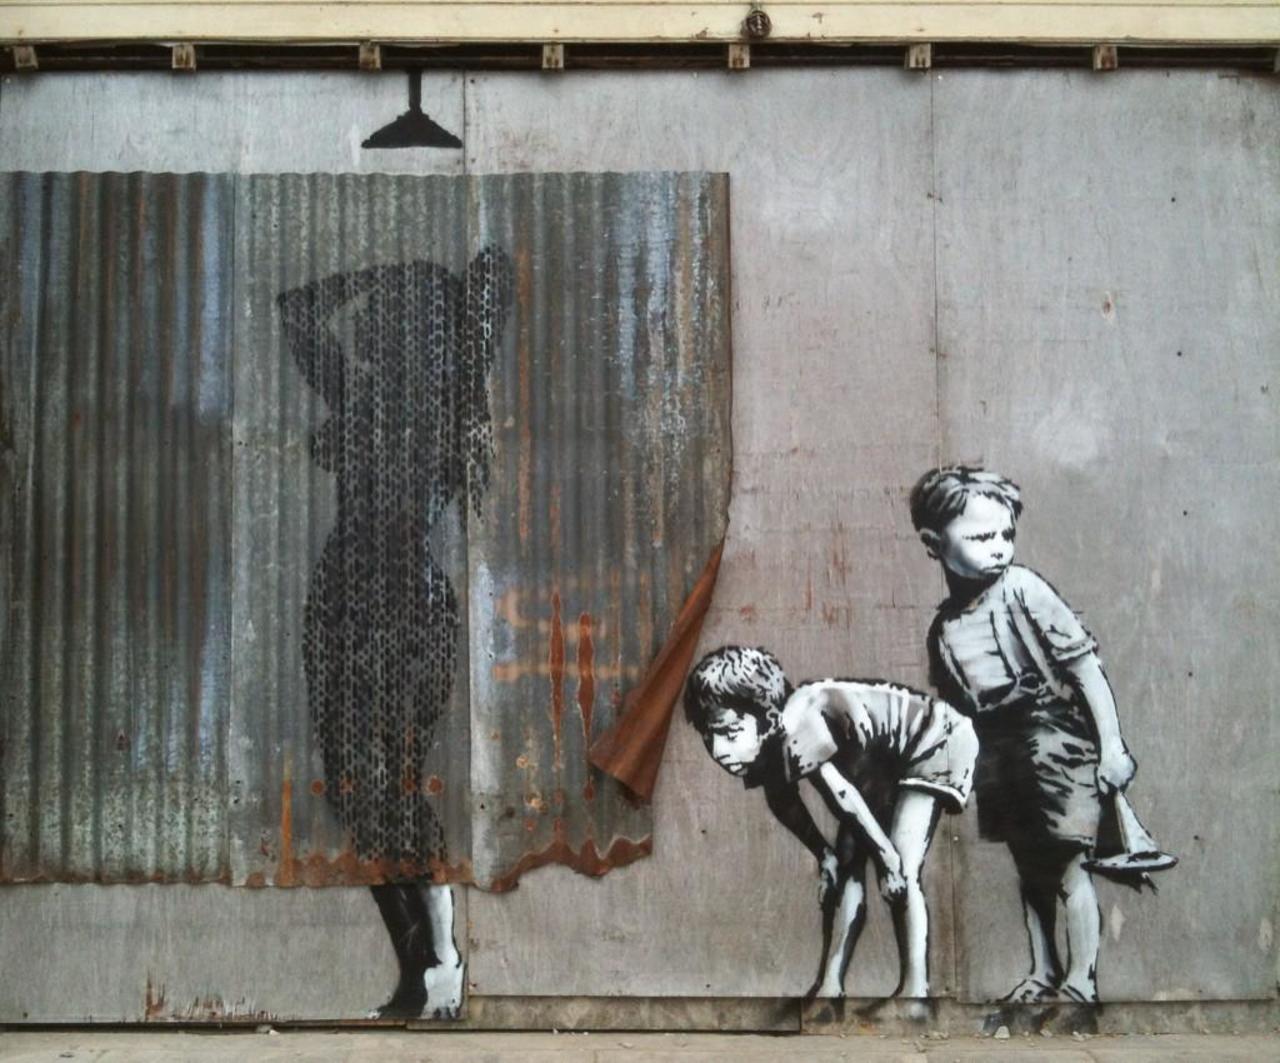 RT @fractallogic1: #Banksy's #StreetArt #Graffiti #Artwork, at #Dismaland, #westonsupermare http://t.co/56z6KdS6ia